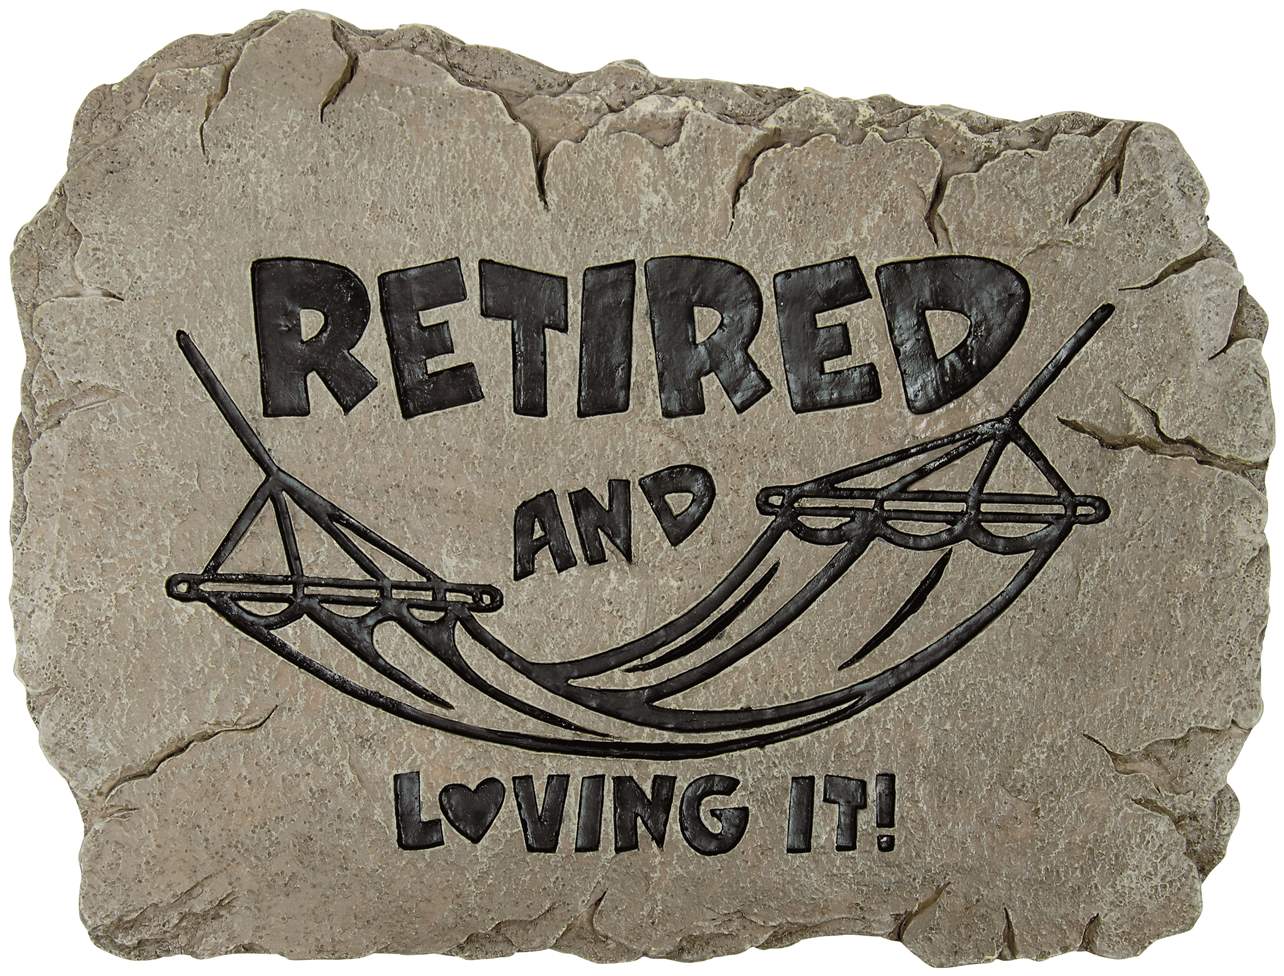 Retired & Loving It Stone